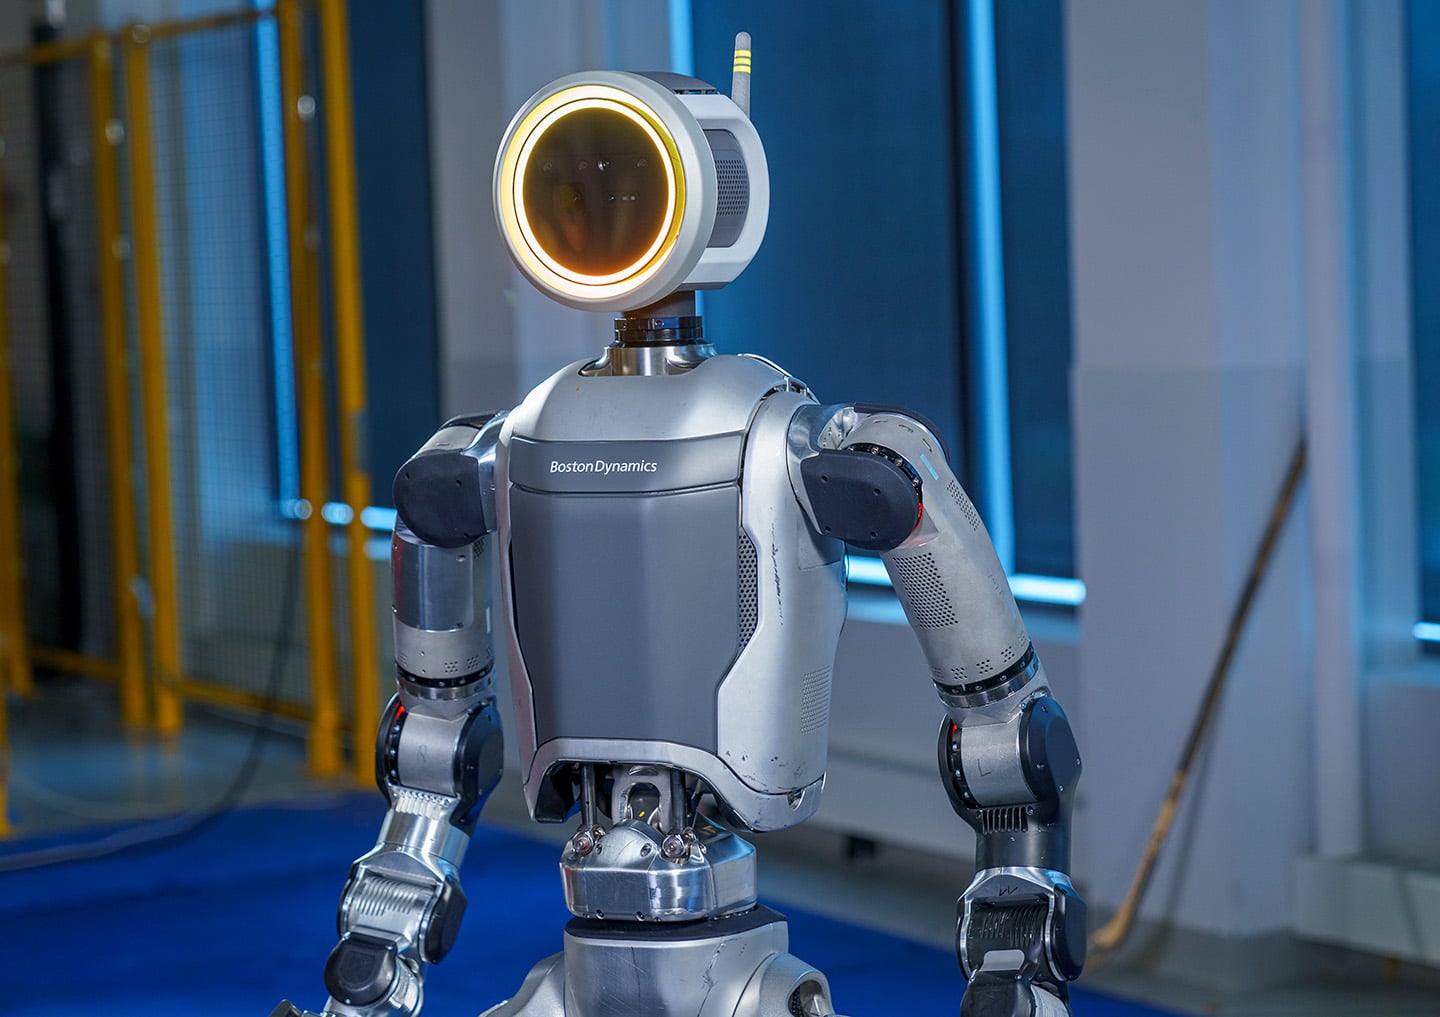 Atlas, a humanoid robot, by Boston Dynamics